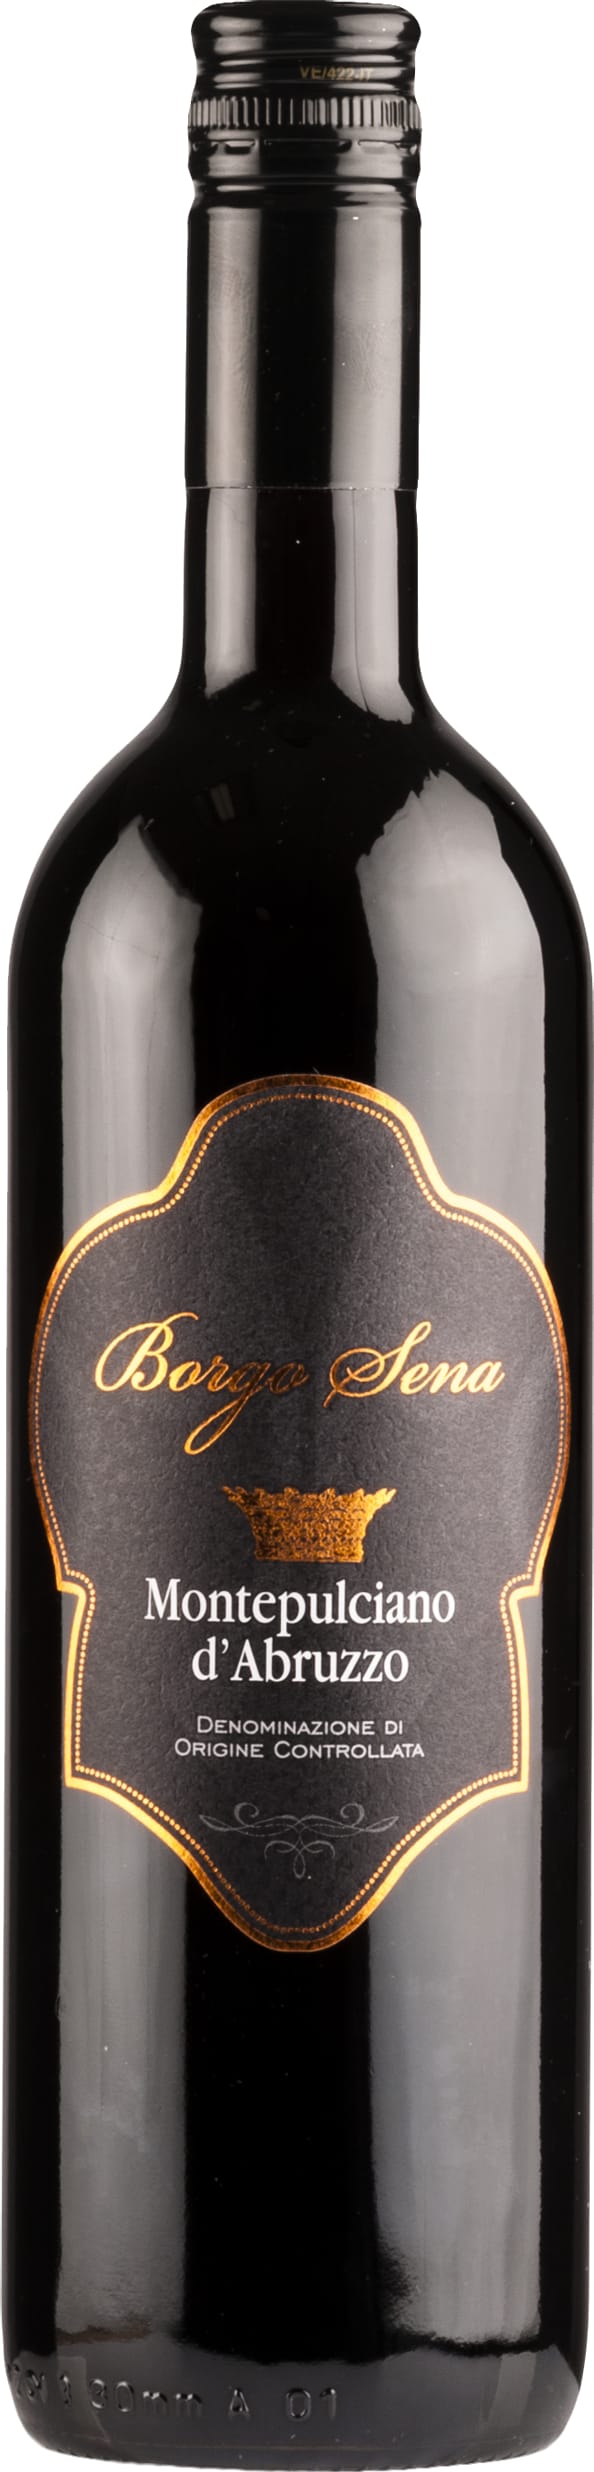 Borgo Sena Montepulciano d Abruzzo 2022 75cl - Buy Borgo Sena Wines from GREAT WINES DIRECT wine shop